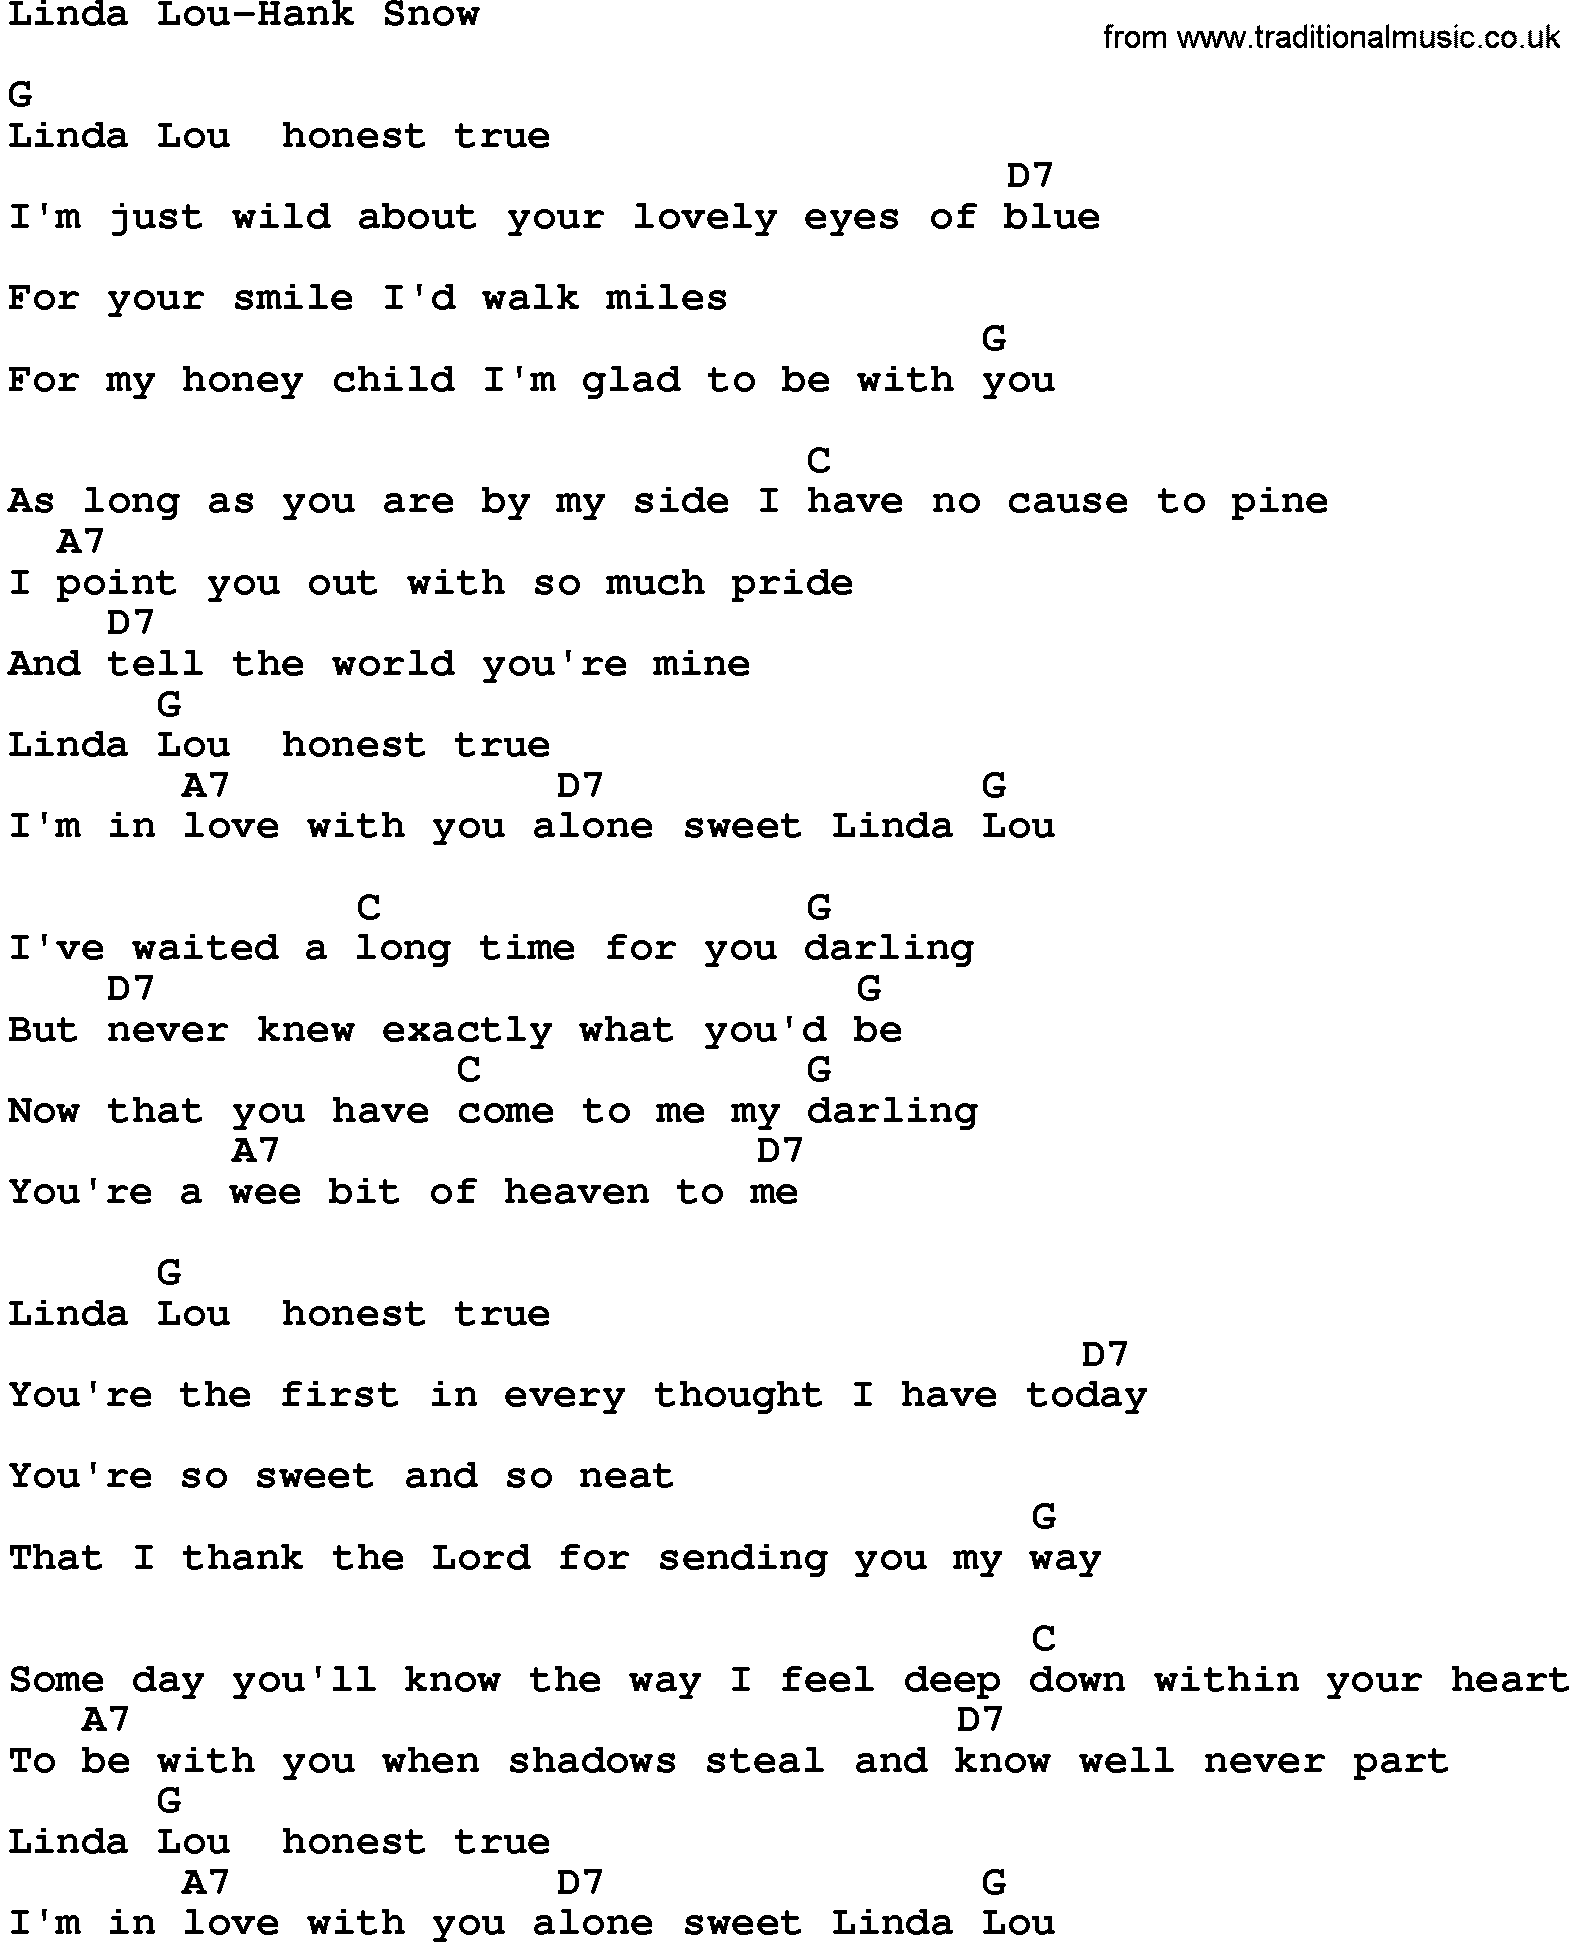 Country music song: Linda Lou-Hank Snow lyrics and chords